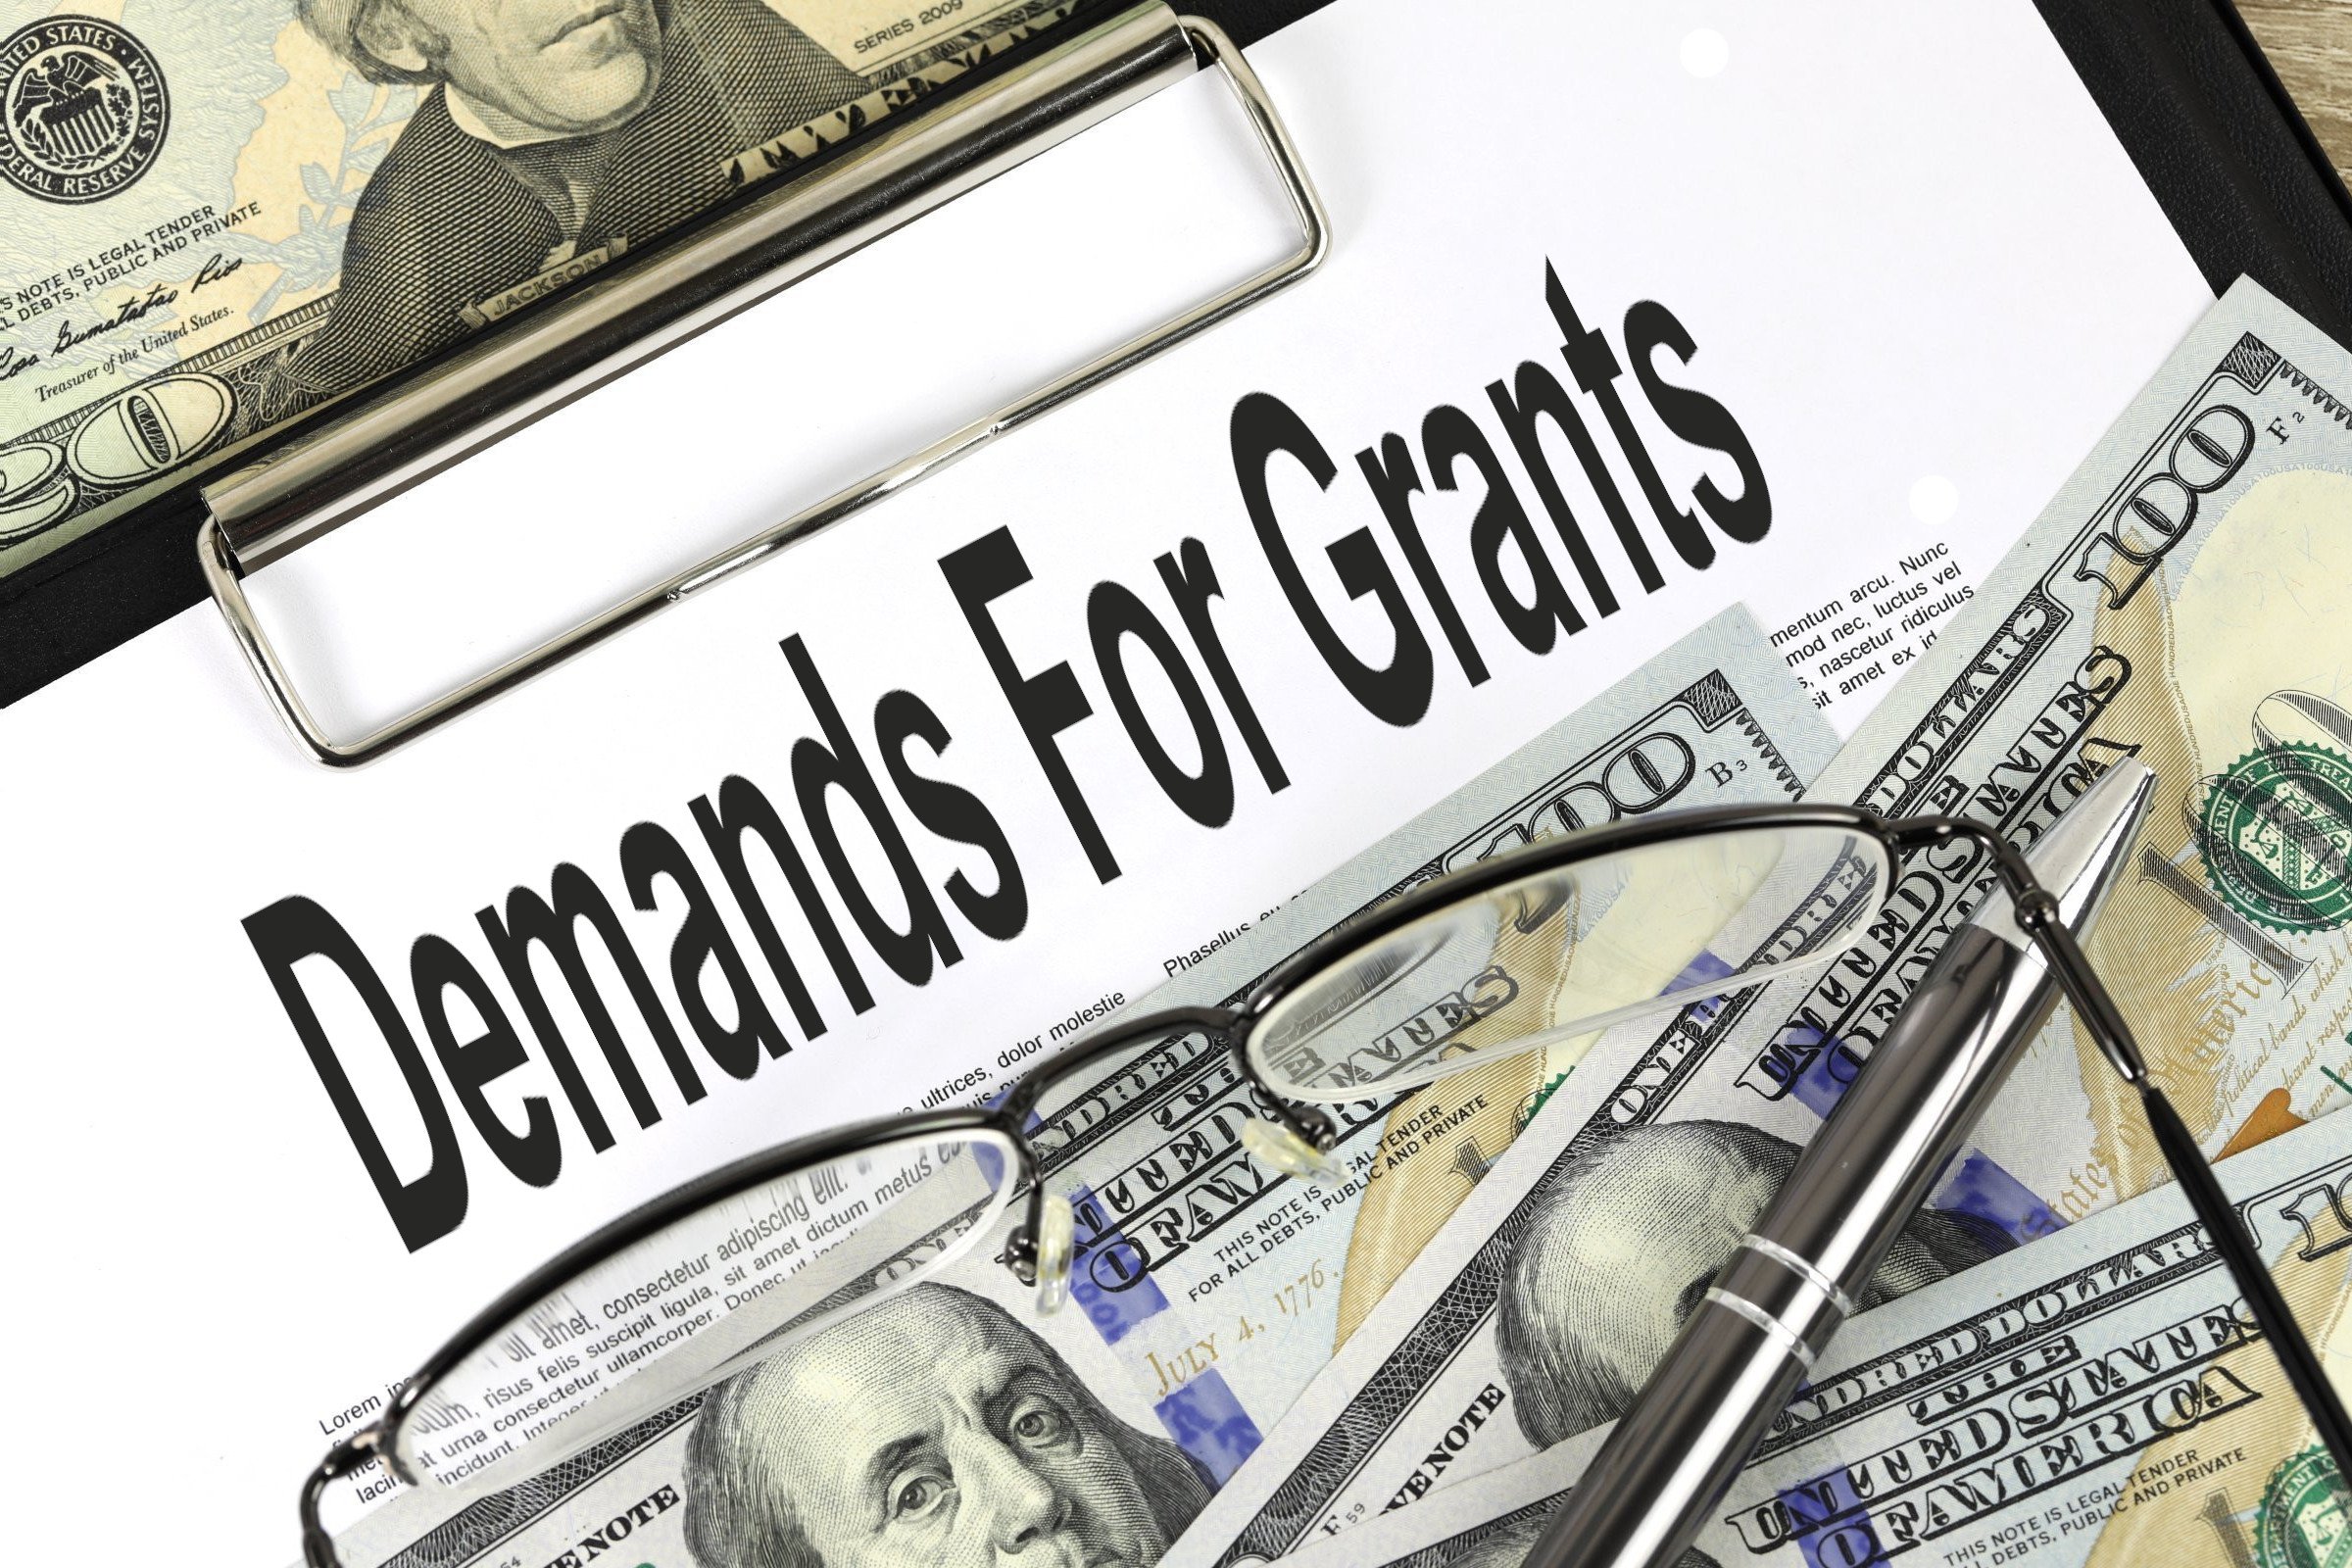 demands for grants